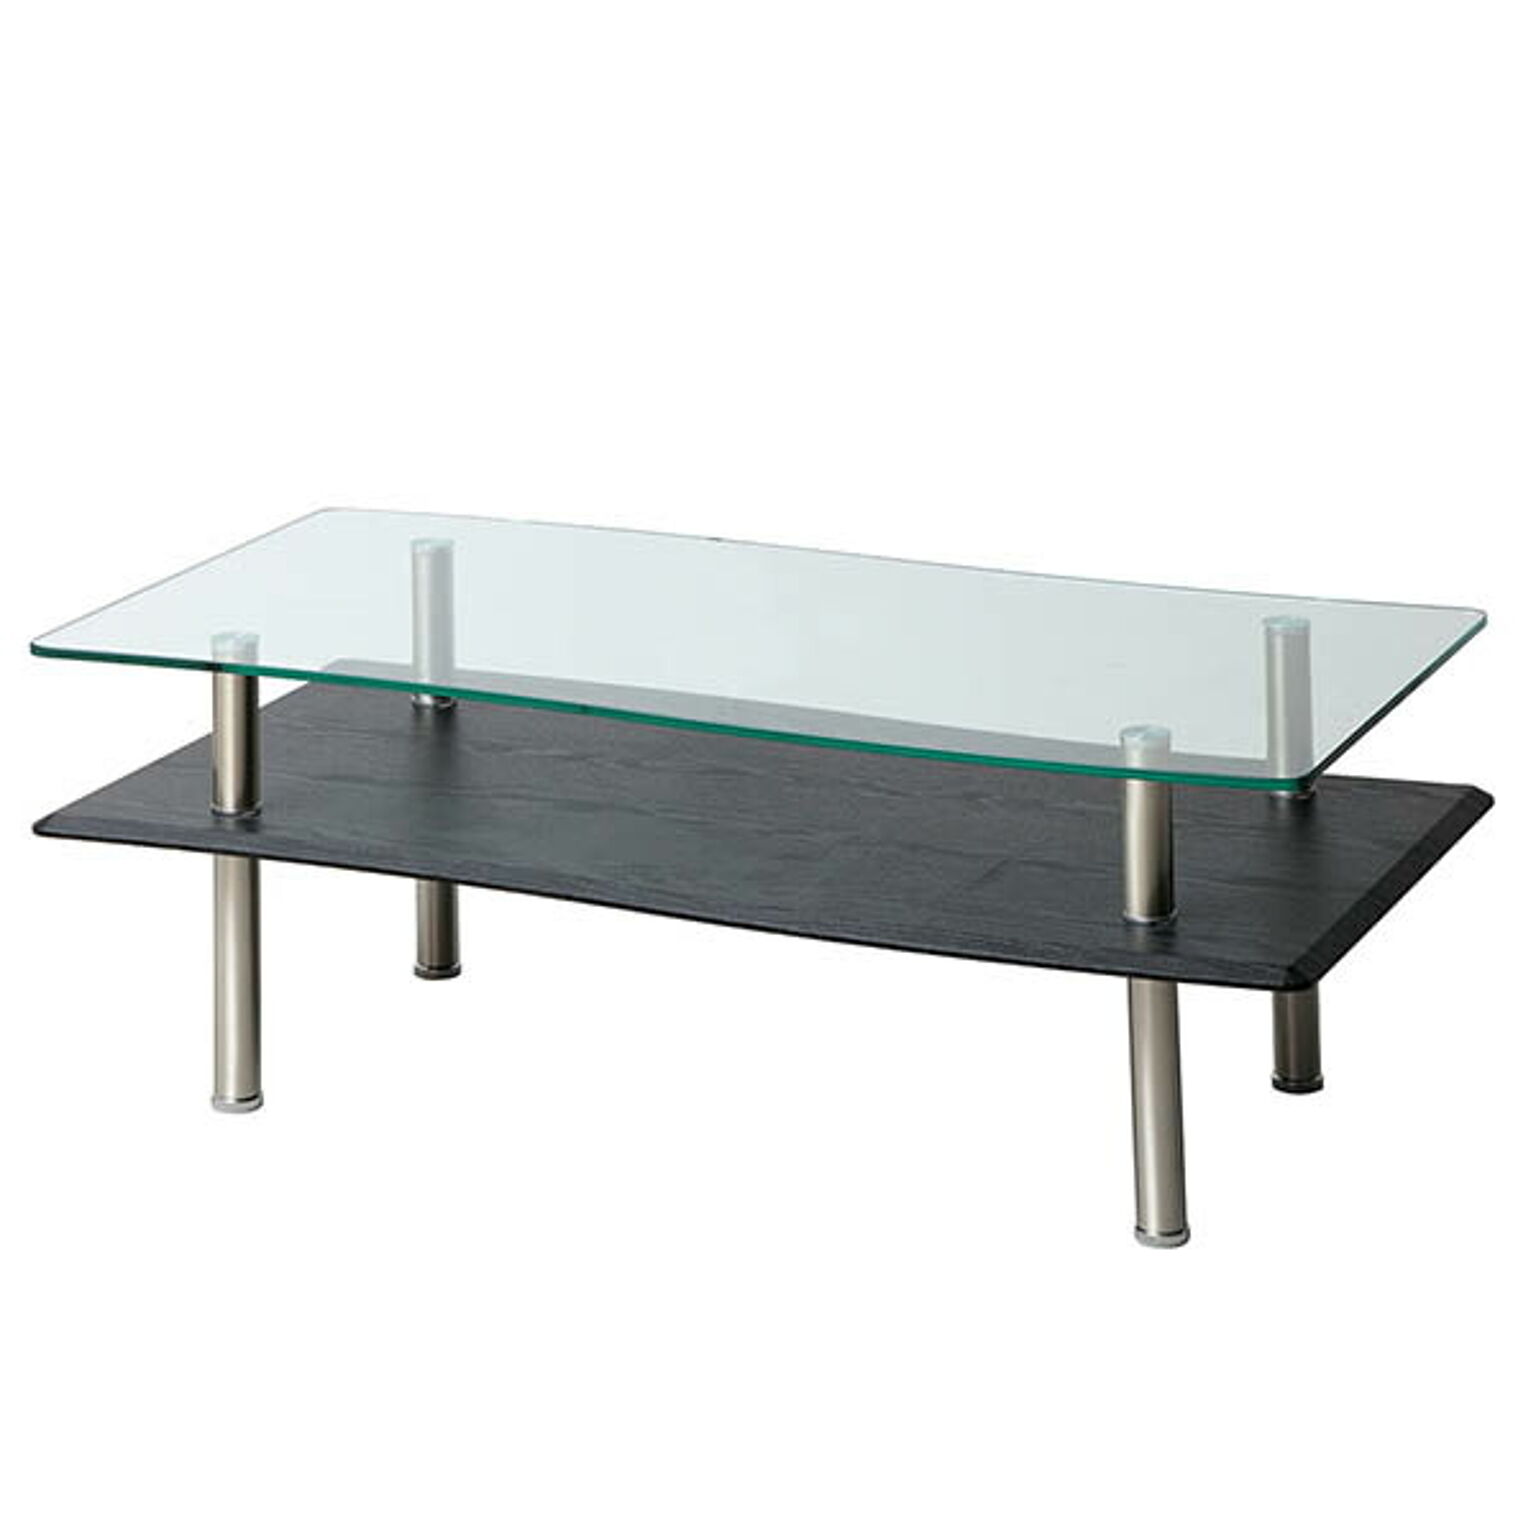 GLT2329 リビングテーブル ブラック色 幅110 高さ41 長方形テーブル 強化ガラス 天板 飛散防止フィルム スチール ローテーブル センターテーブル 棚付 ブリーズ